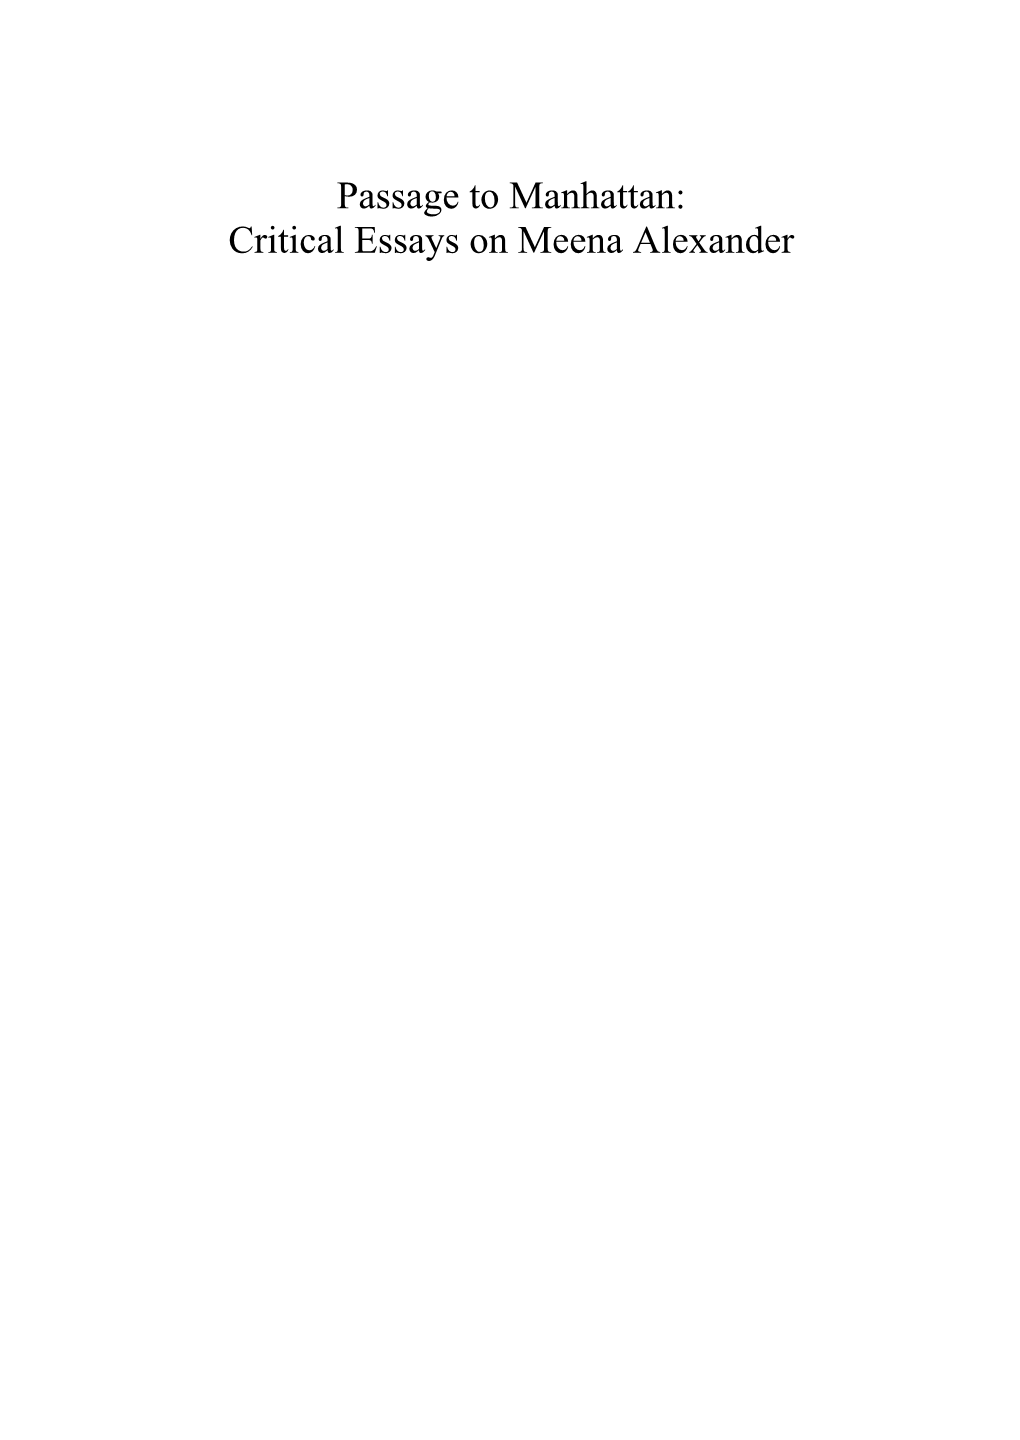 Critical Essays on Meena Alexander